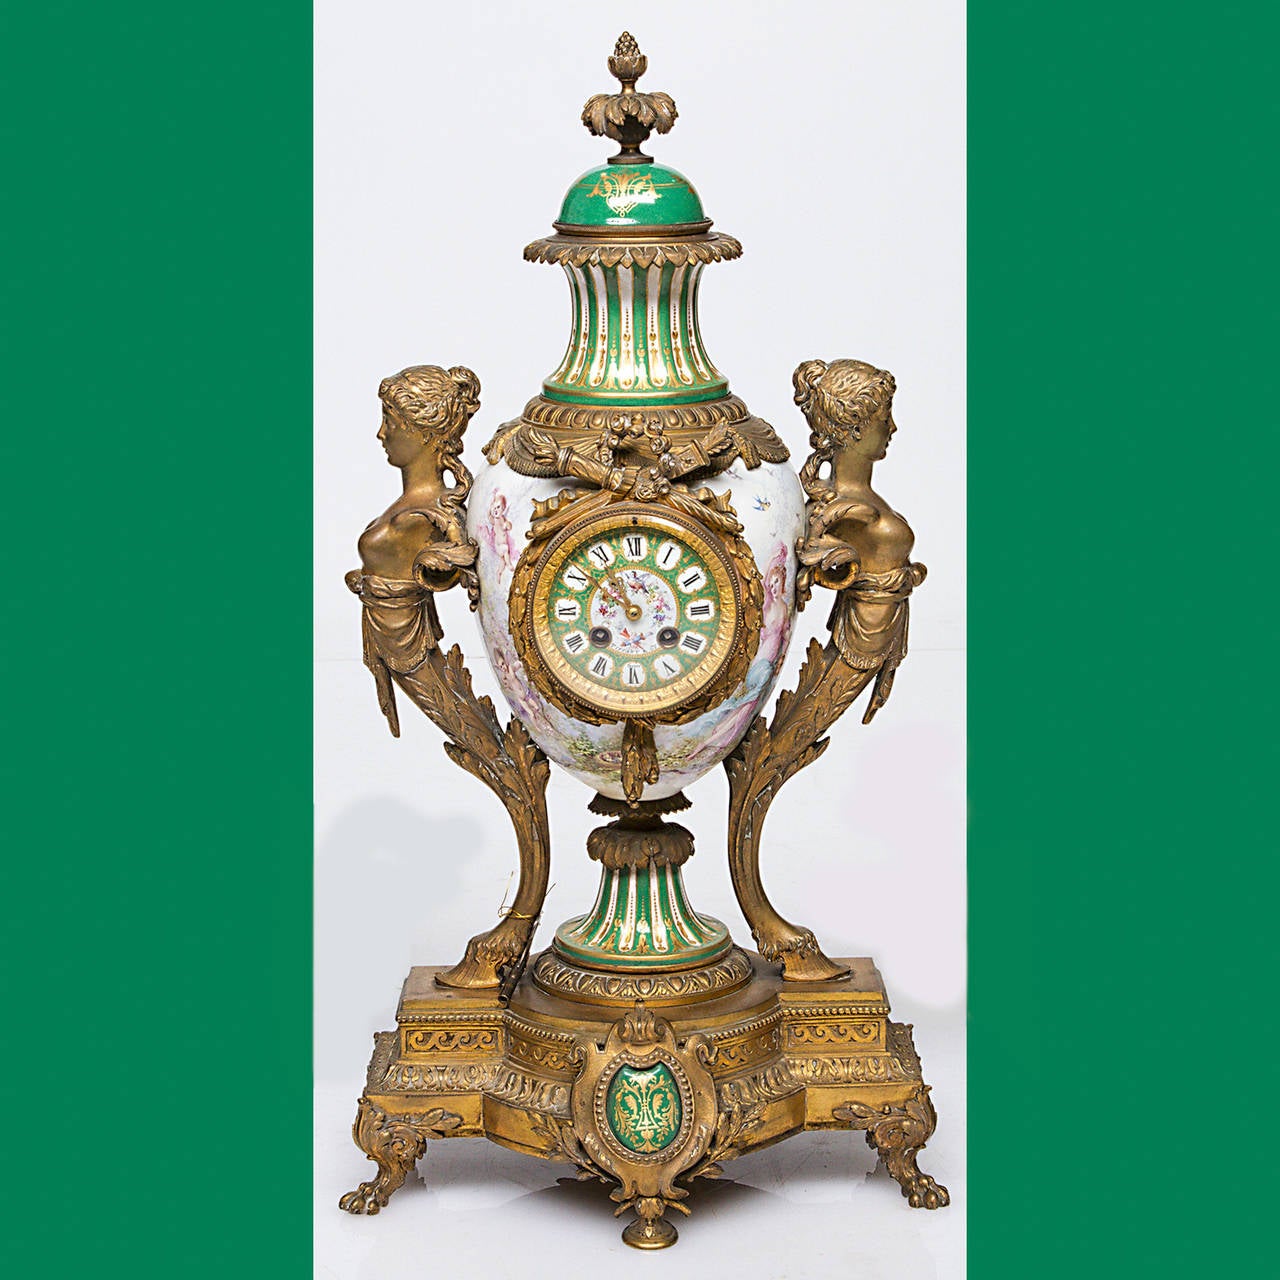 A superb Louis XV three piece bronze ormolu and French porcelain clock set. Signed 